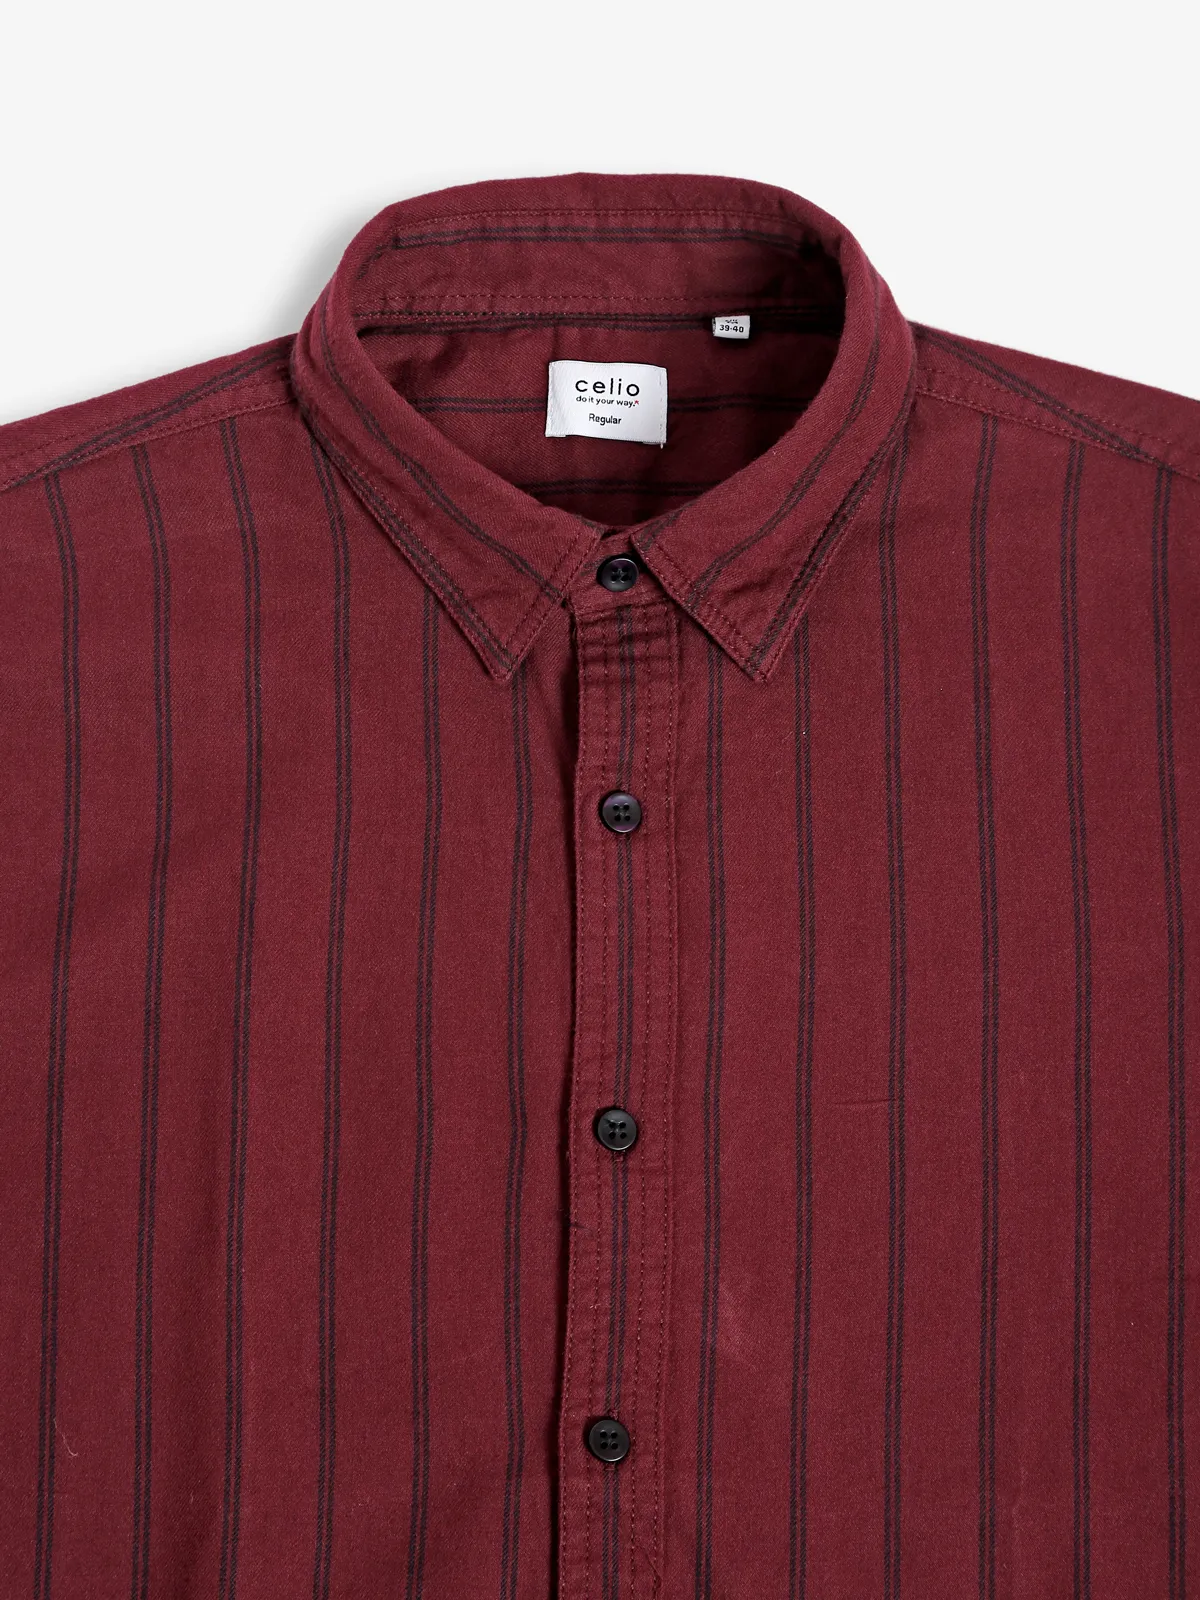 Celio maroon stripe cotton shirt